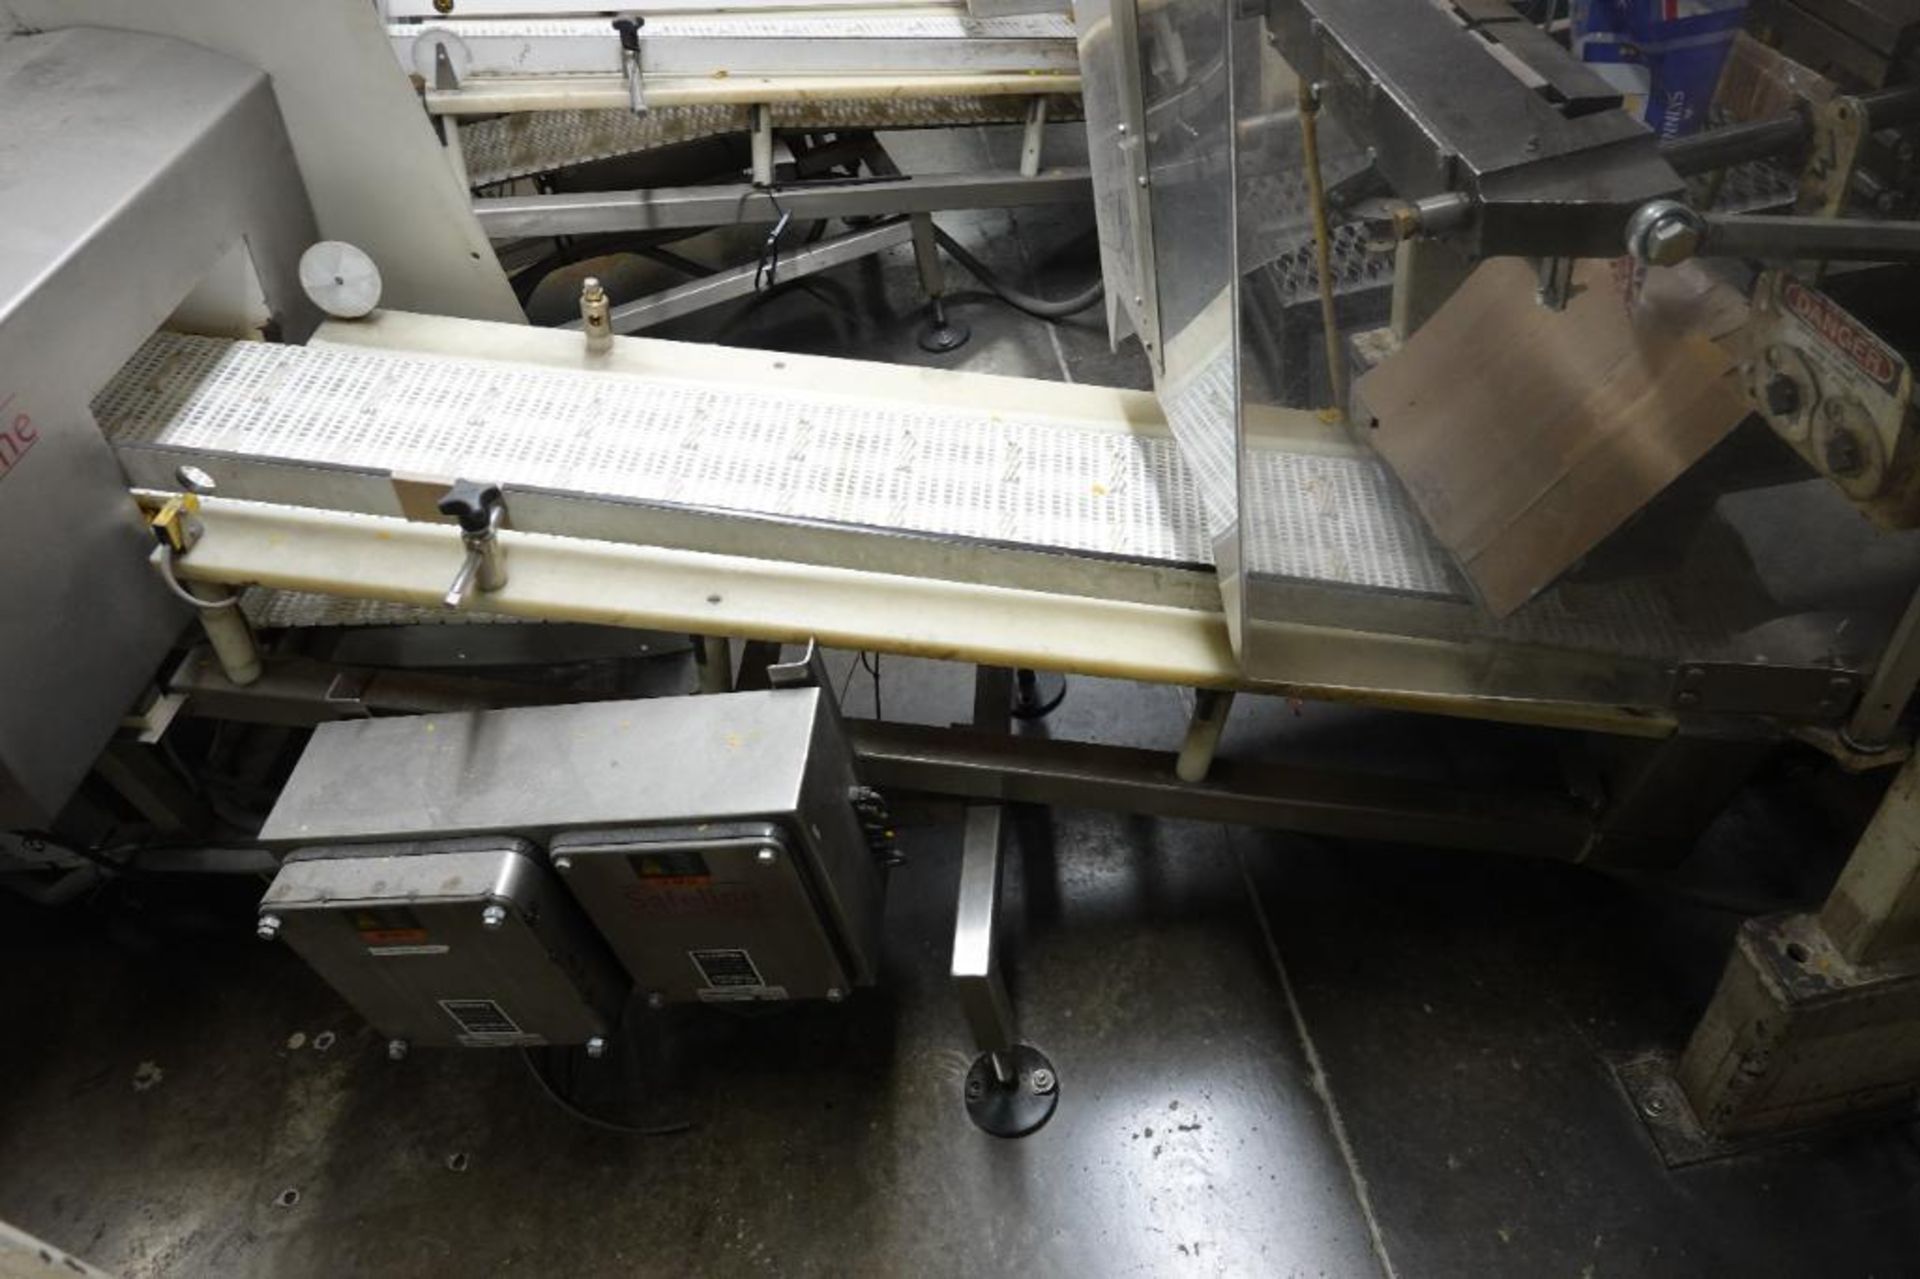 Safeline metal detector with incline conveyor - Image 2 of 10